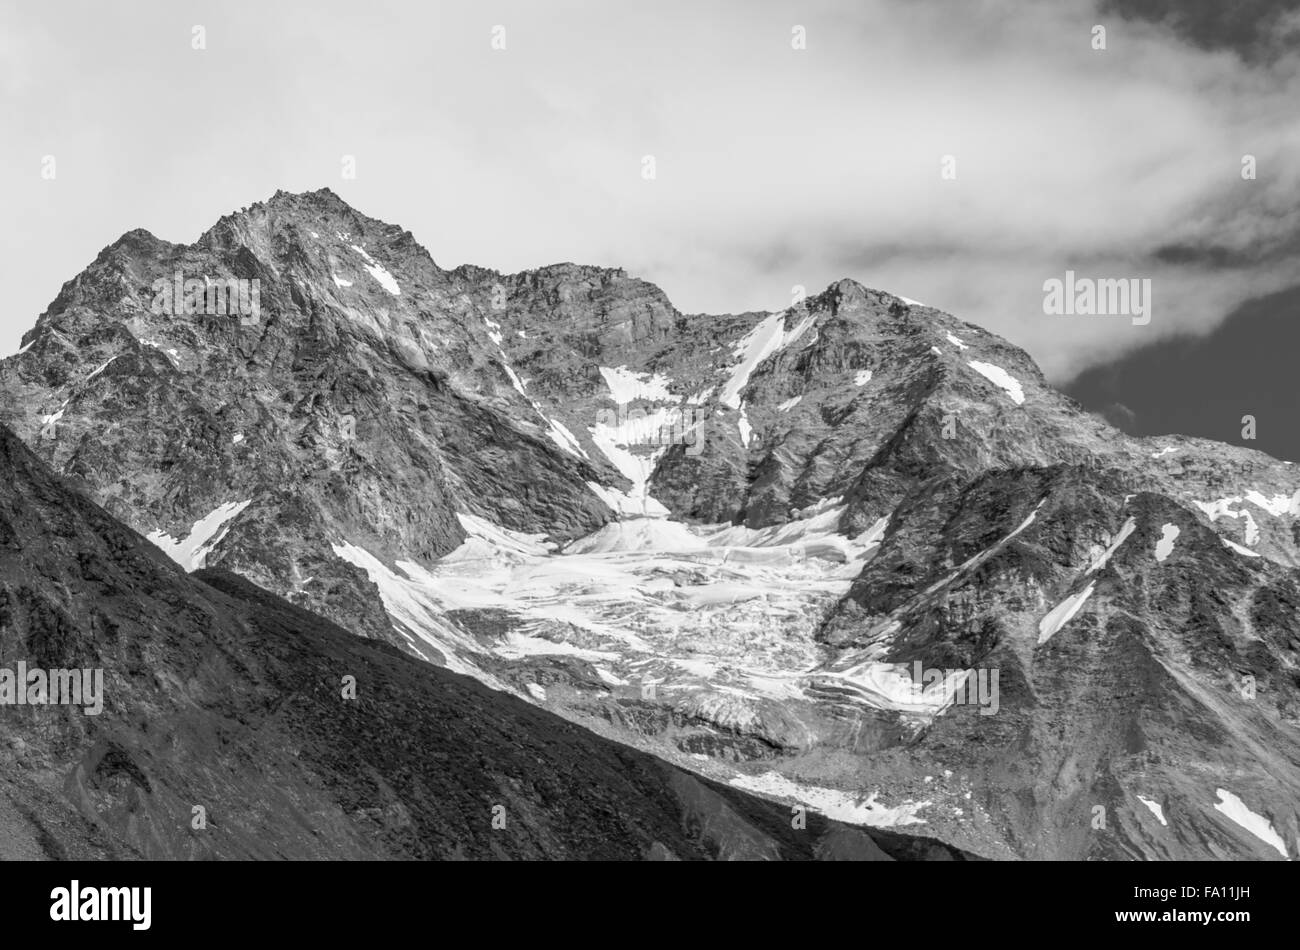 Dramatic Photo of Mountain Tops & Snow In Black & White Inside Glacier Bay National Park, Alaska Stock Photo